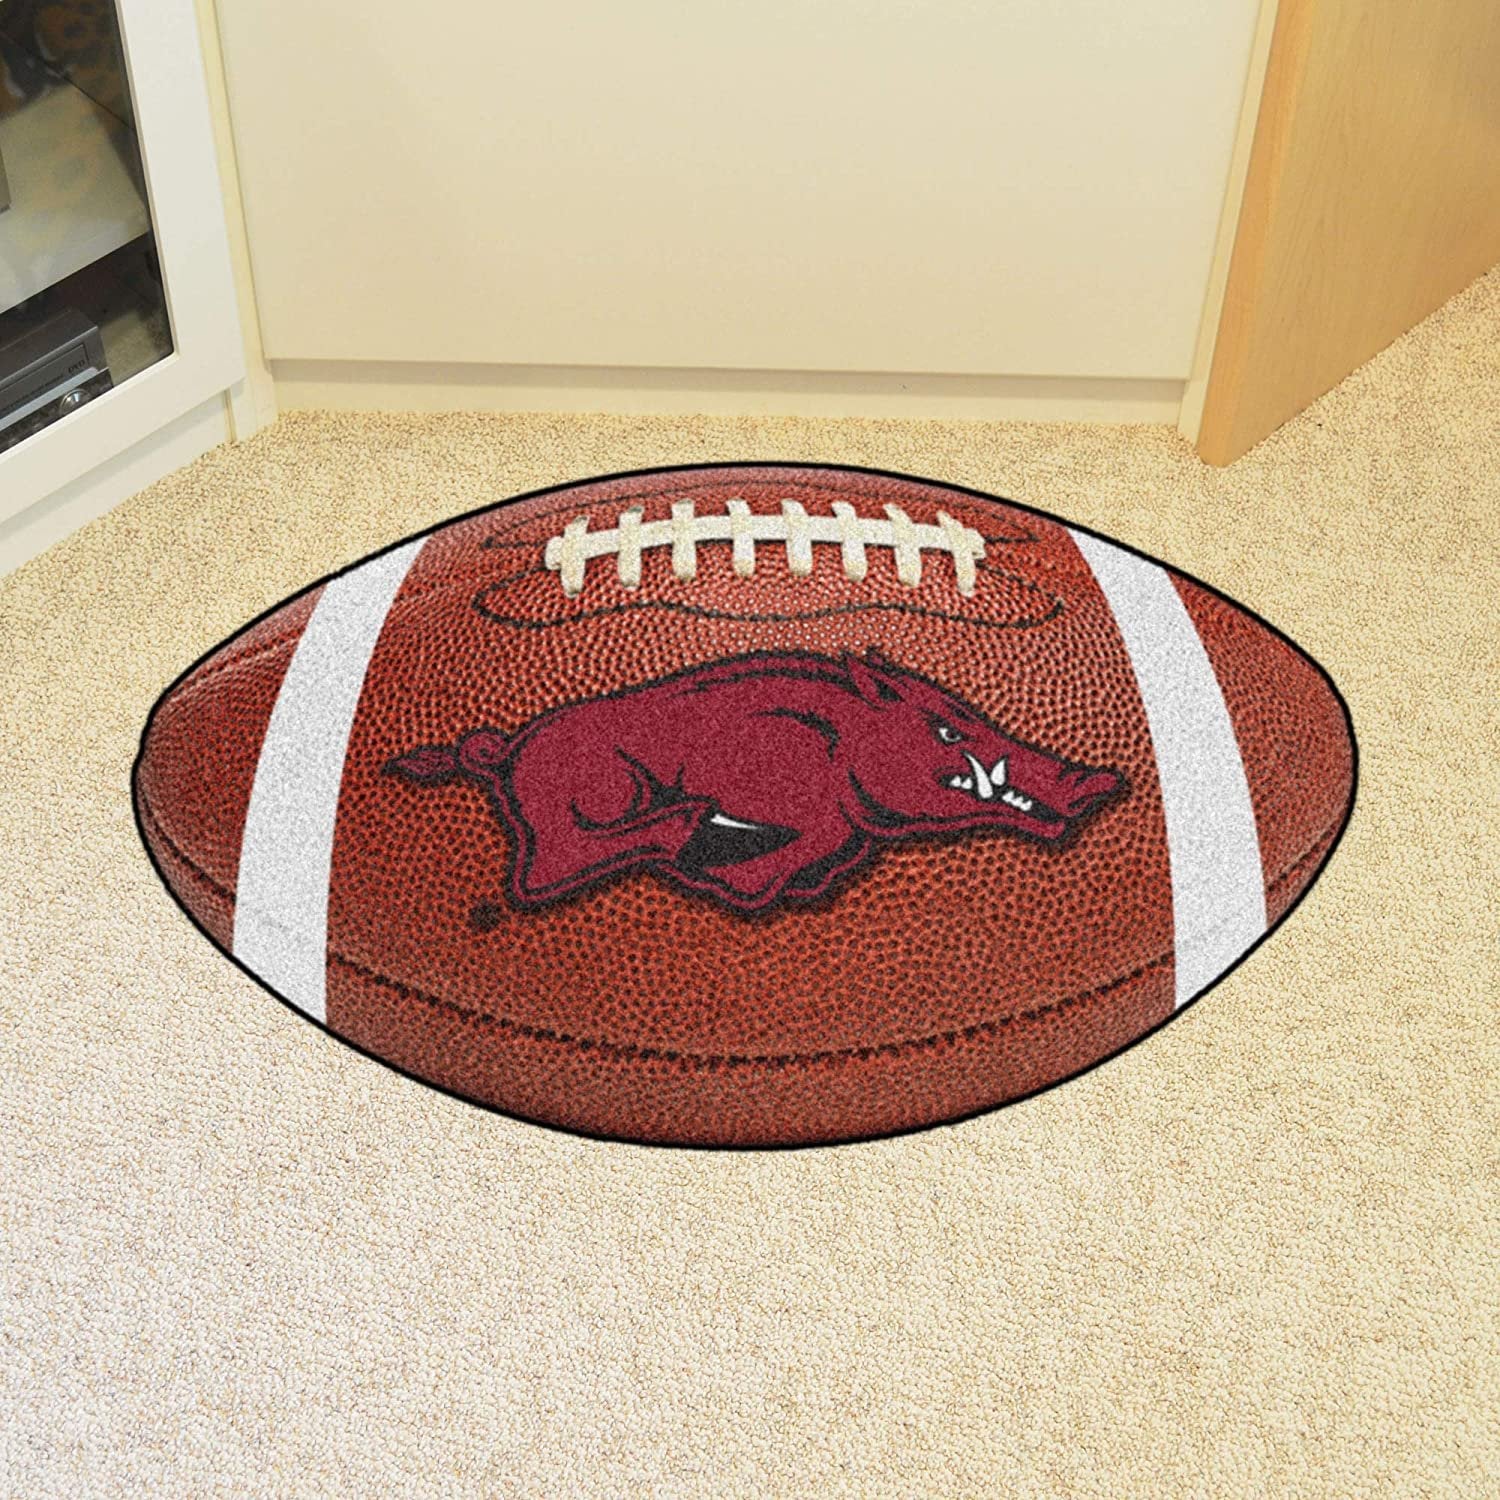 University of Arkansas Razorbacks Floor Mat Area Rug, 20x32 Inch, Non-Skid Backing, Football Design